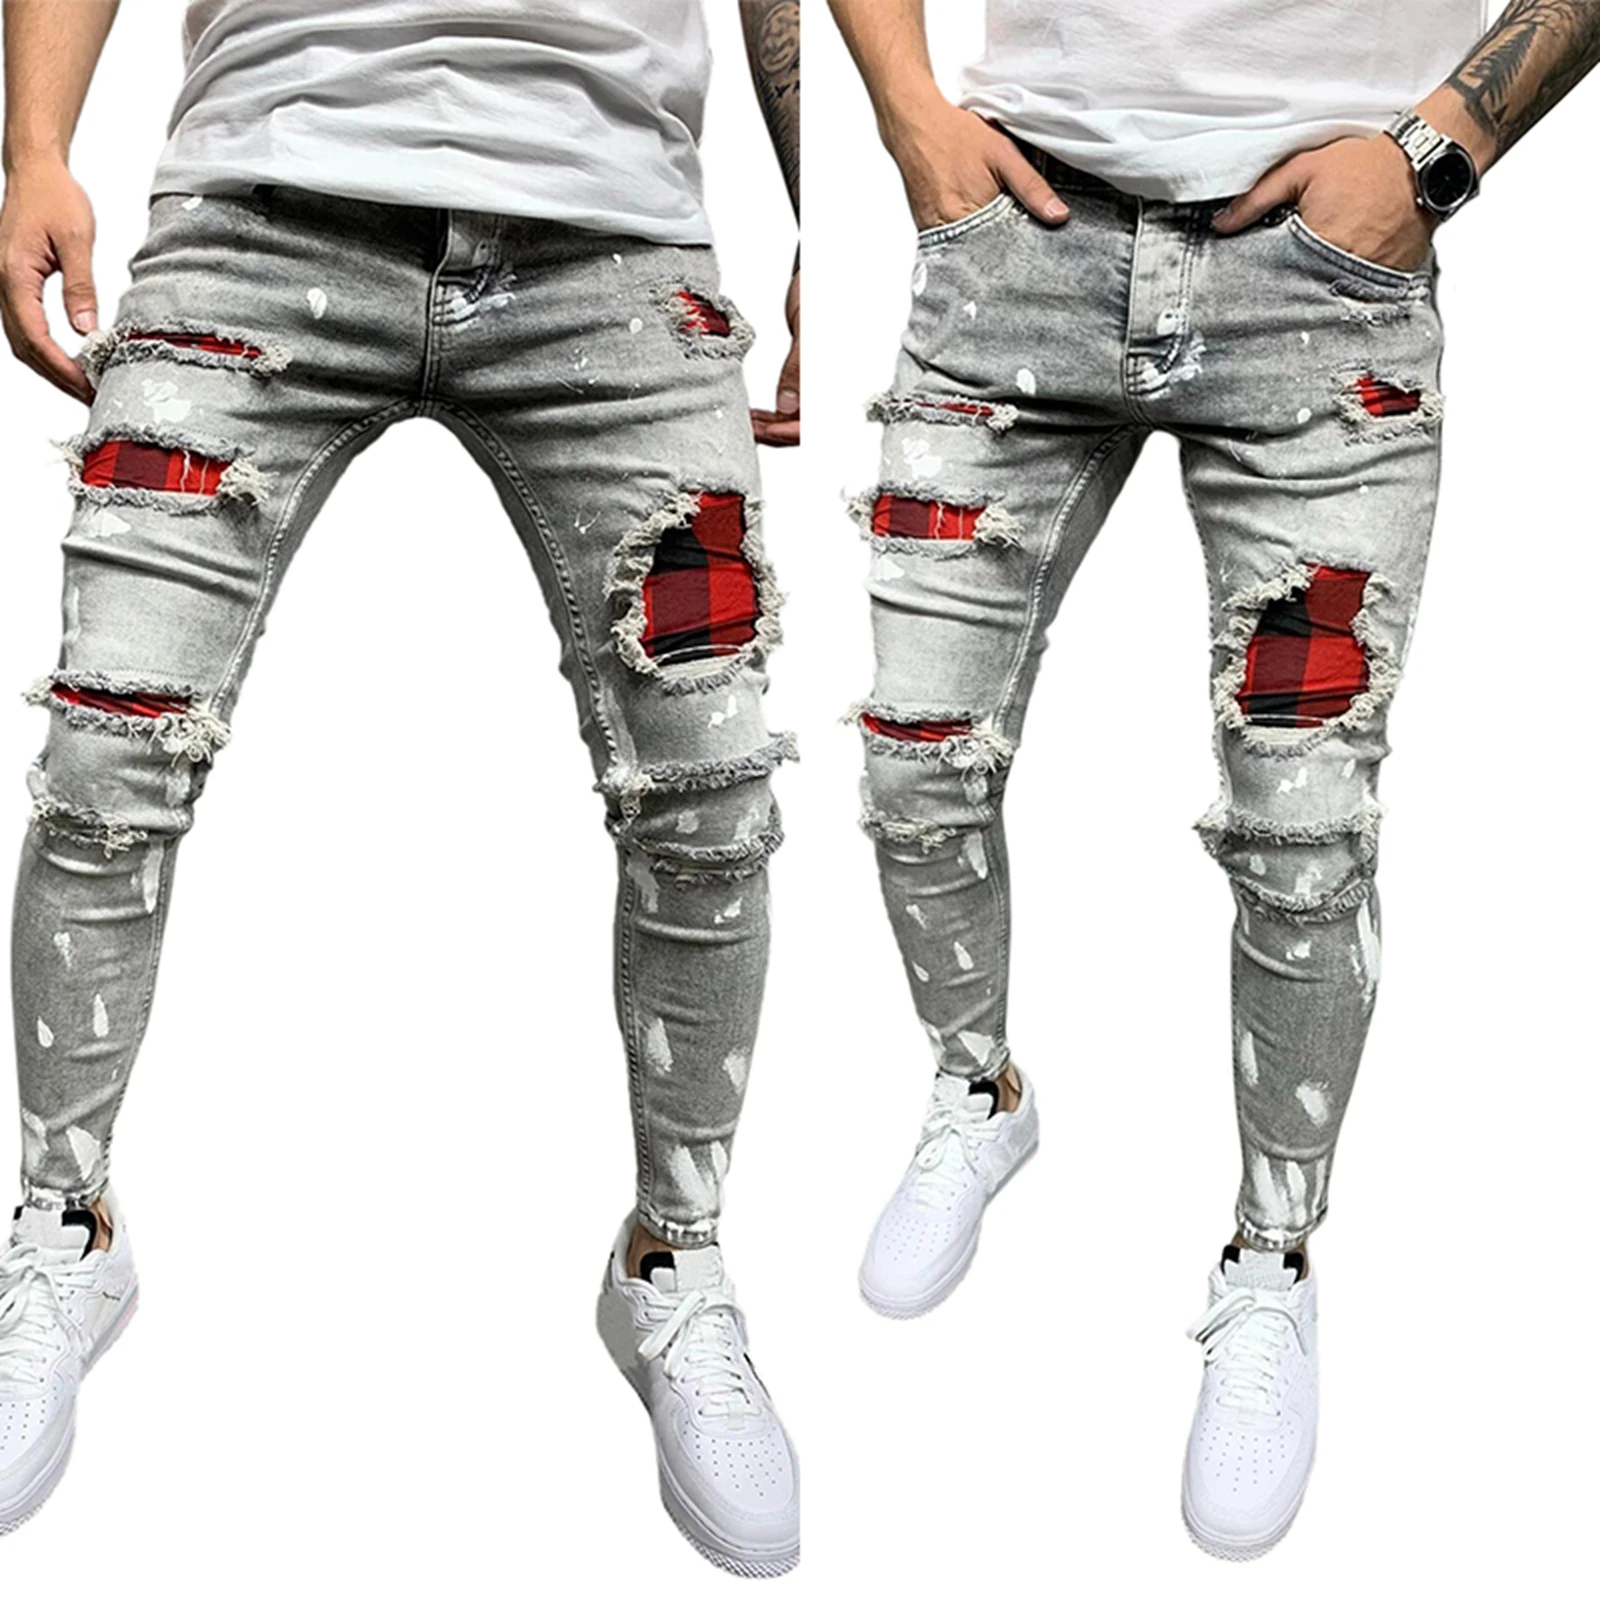 

New Fashion Mens Jeans Spliced Ripped Denim Pants Pencil Jeans Slim Patch Pants Red Check Plaid Pants Elastic Waistline S-3XL